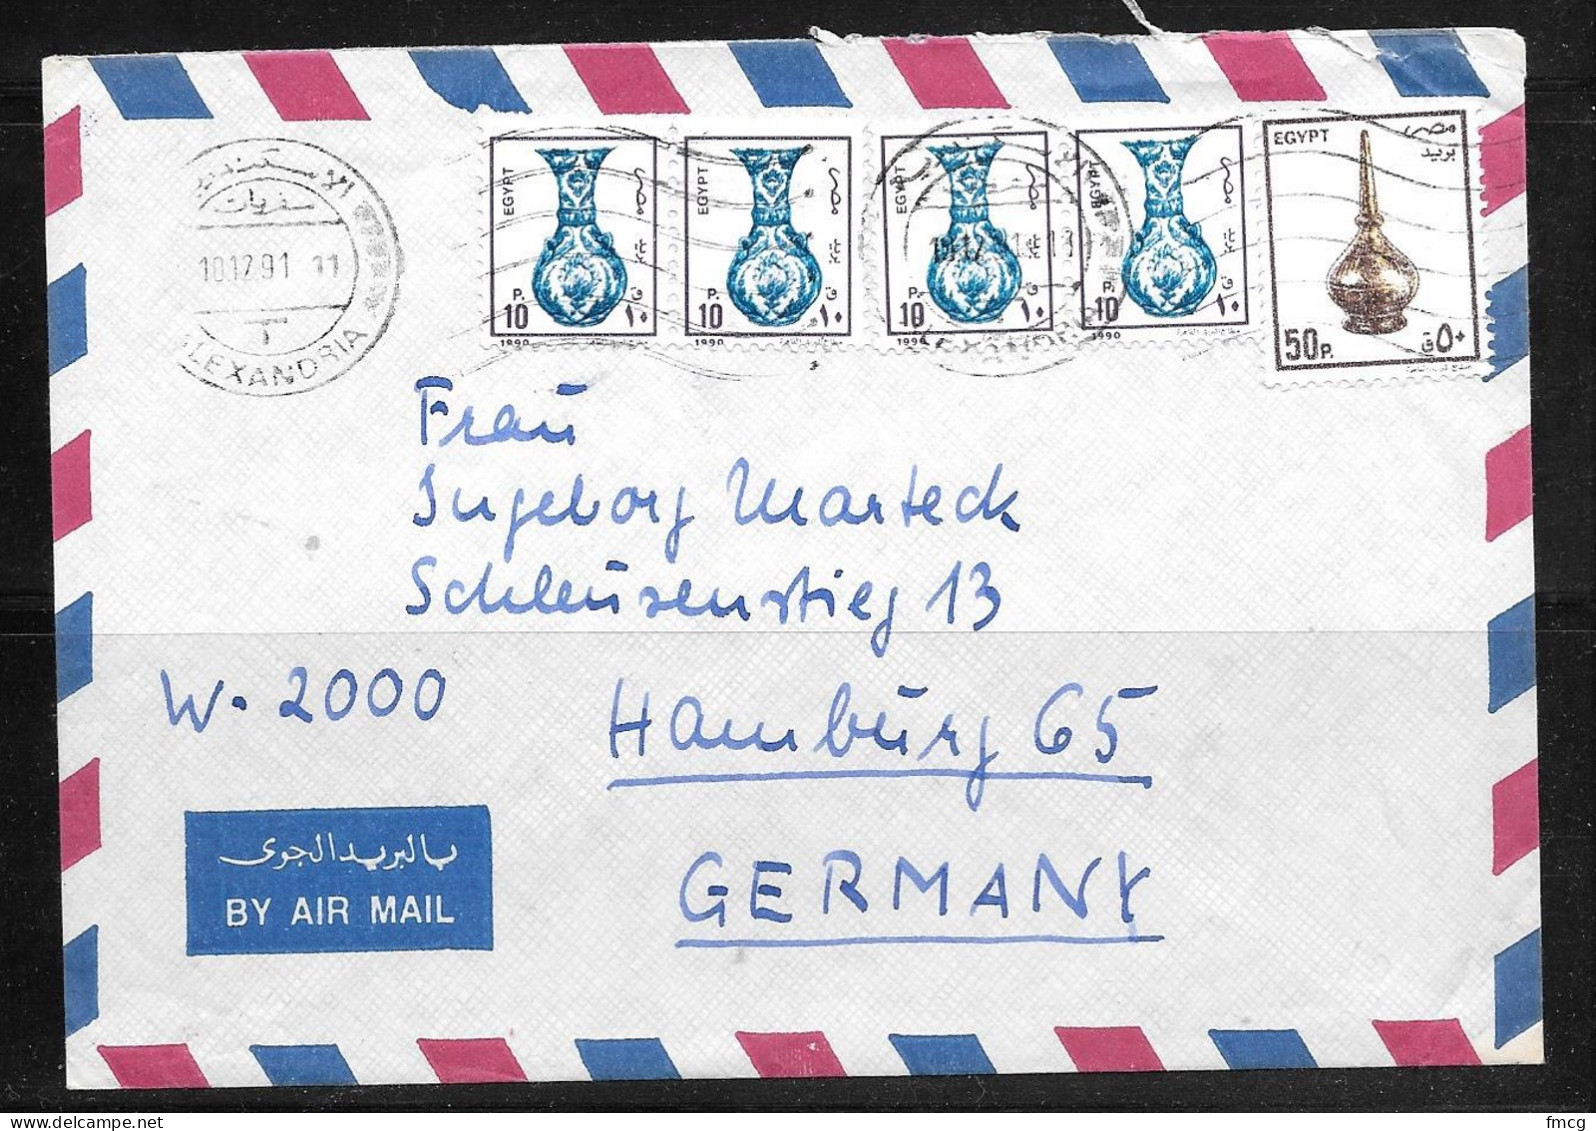 Egypt 1991 Alexandria (10.12.91) To Hamburg Germany - Used Stamps